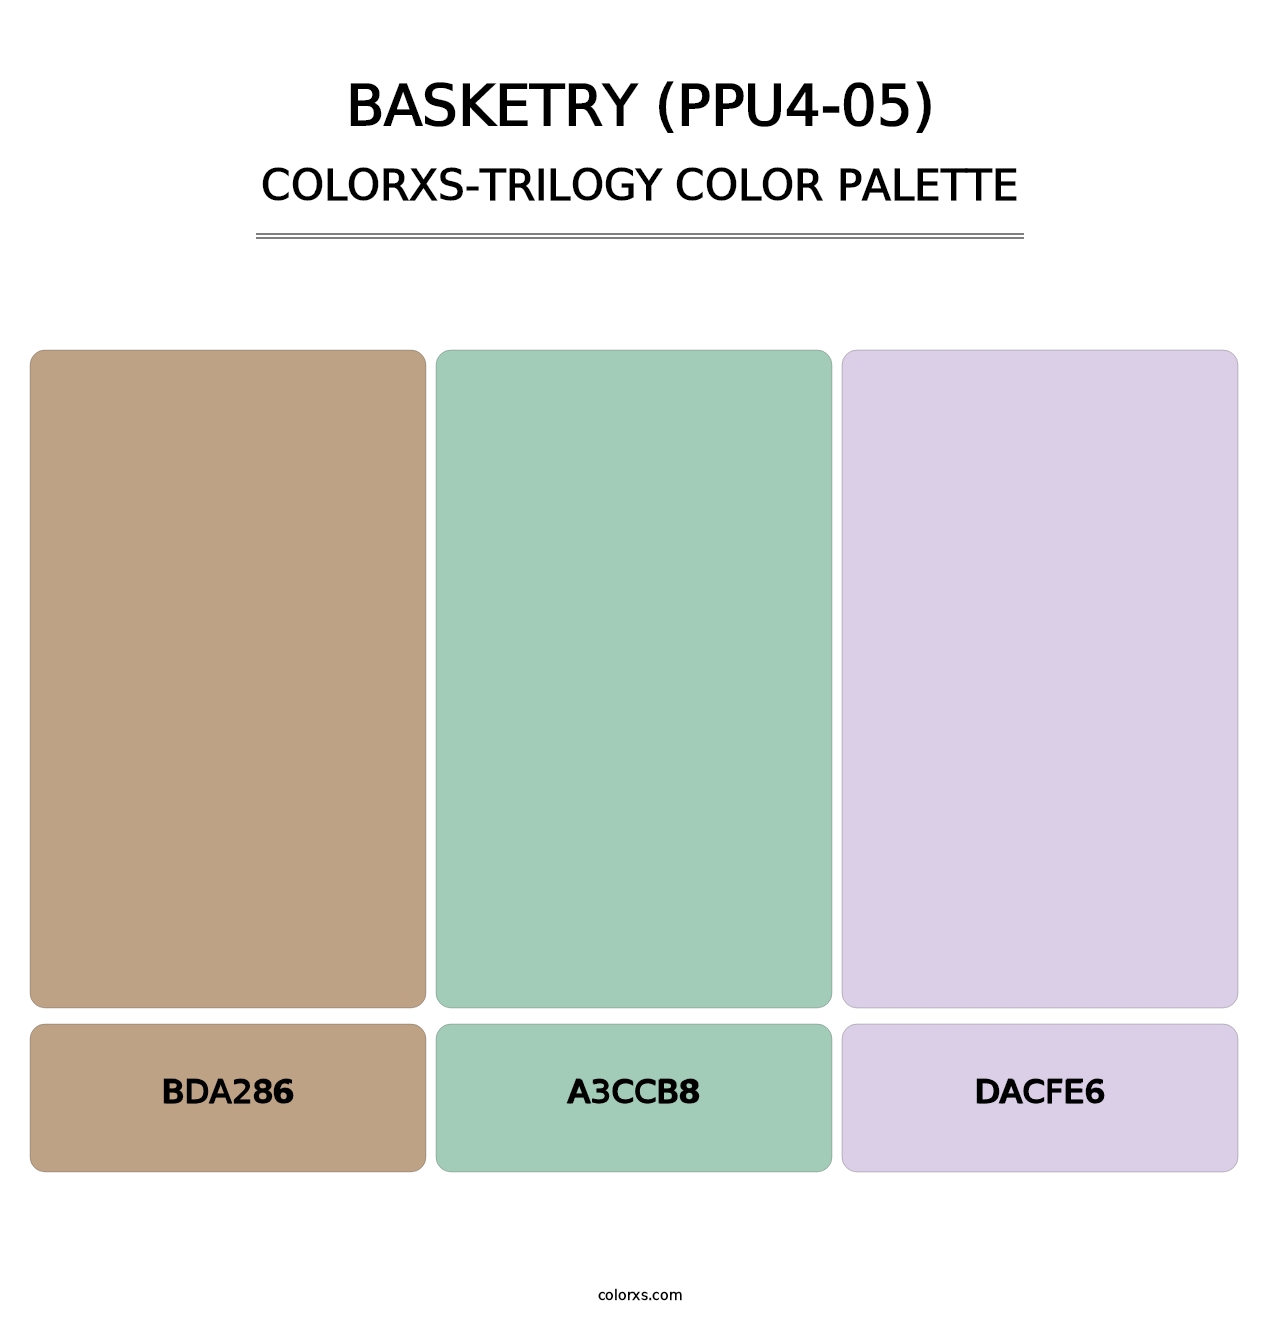 Basketry (PPU4-05) - Colorxs Trilogy Palette